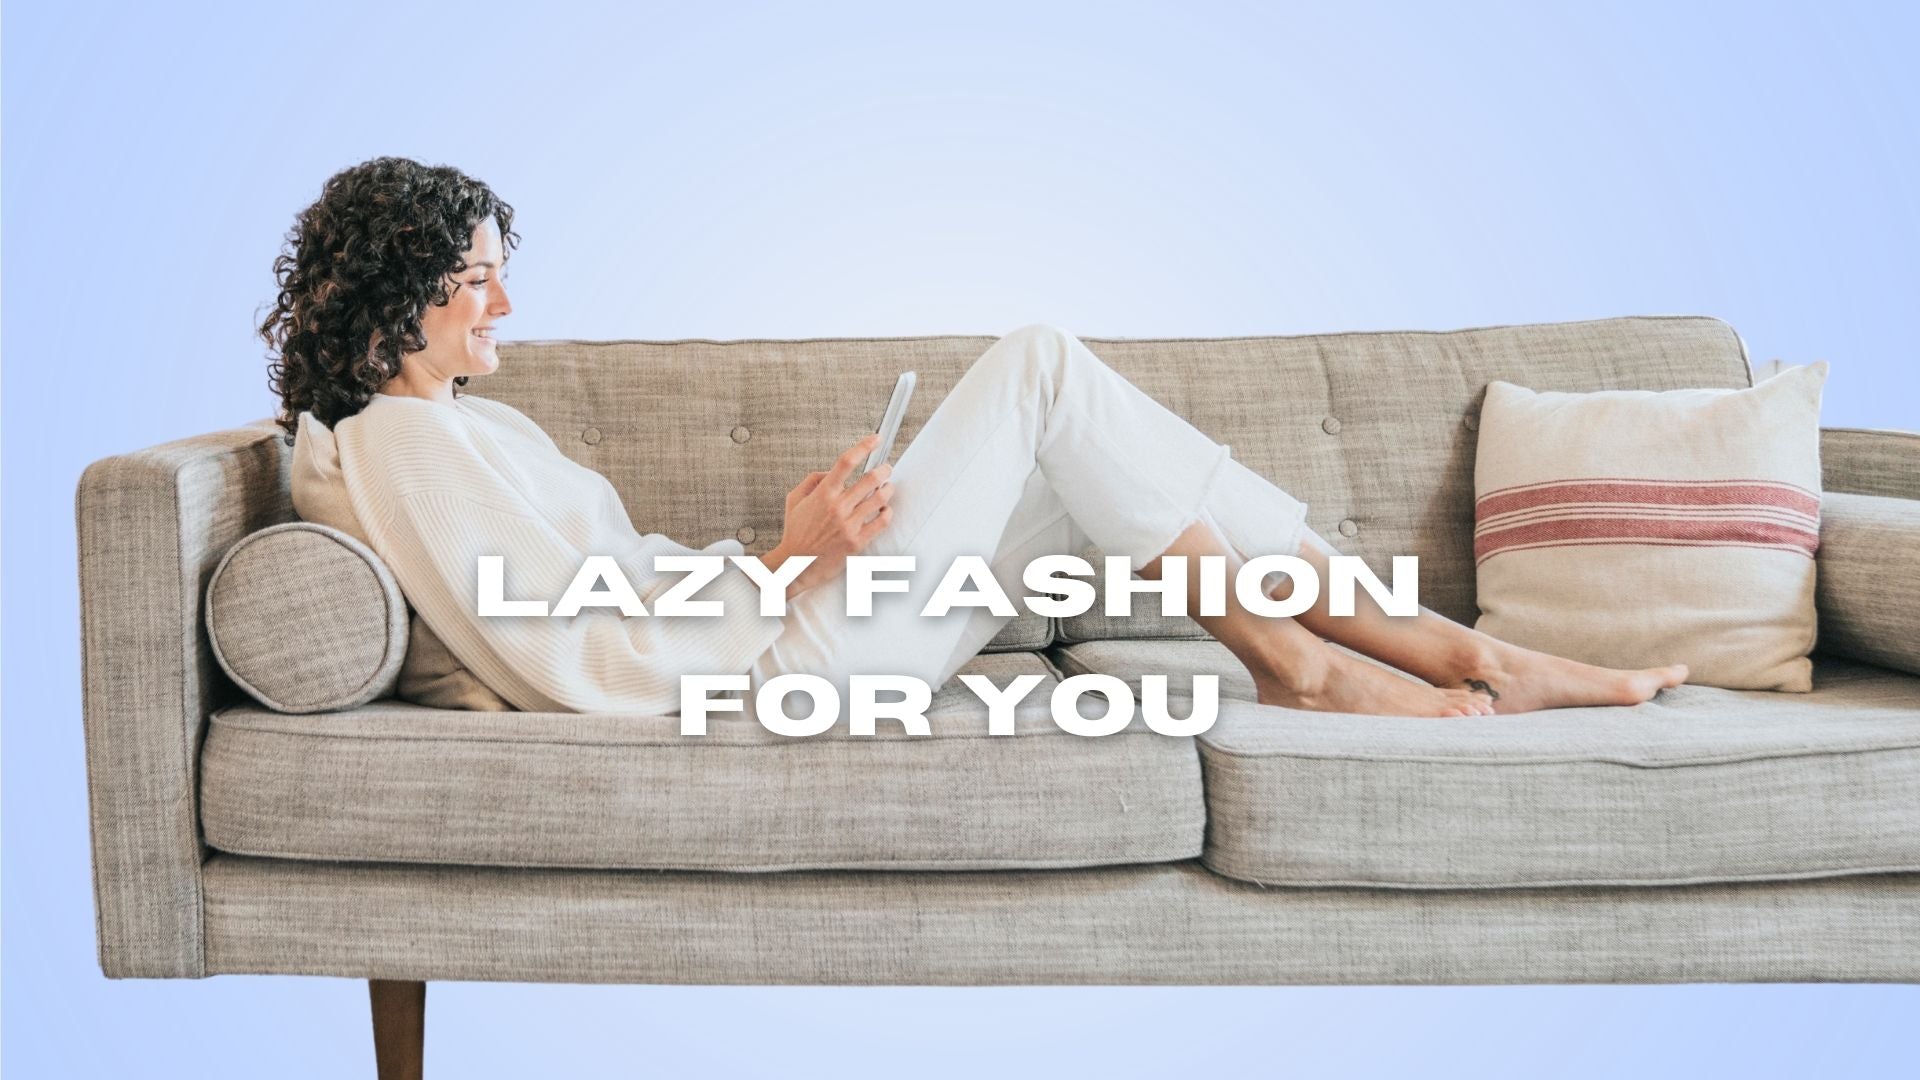 Sourí Fashion lazy fashion for you